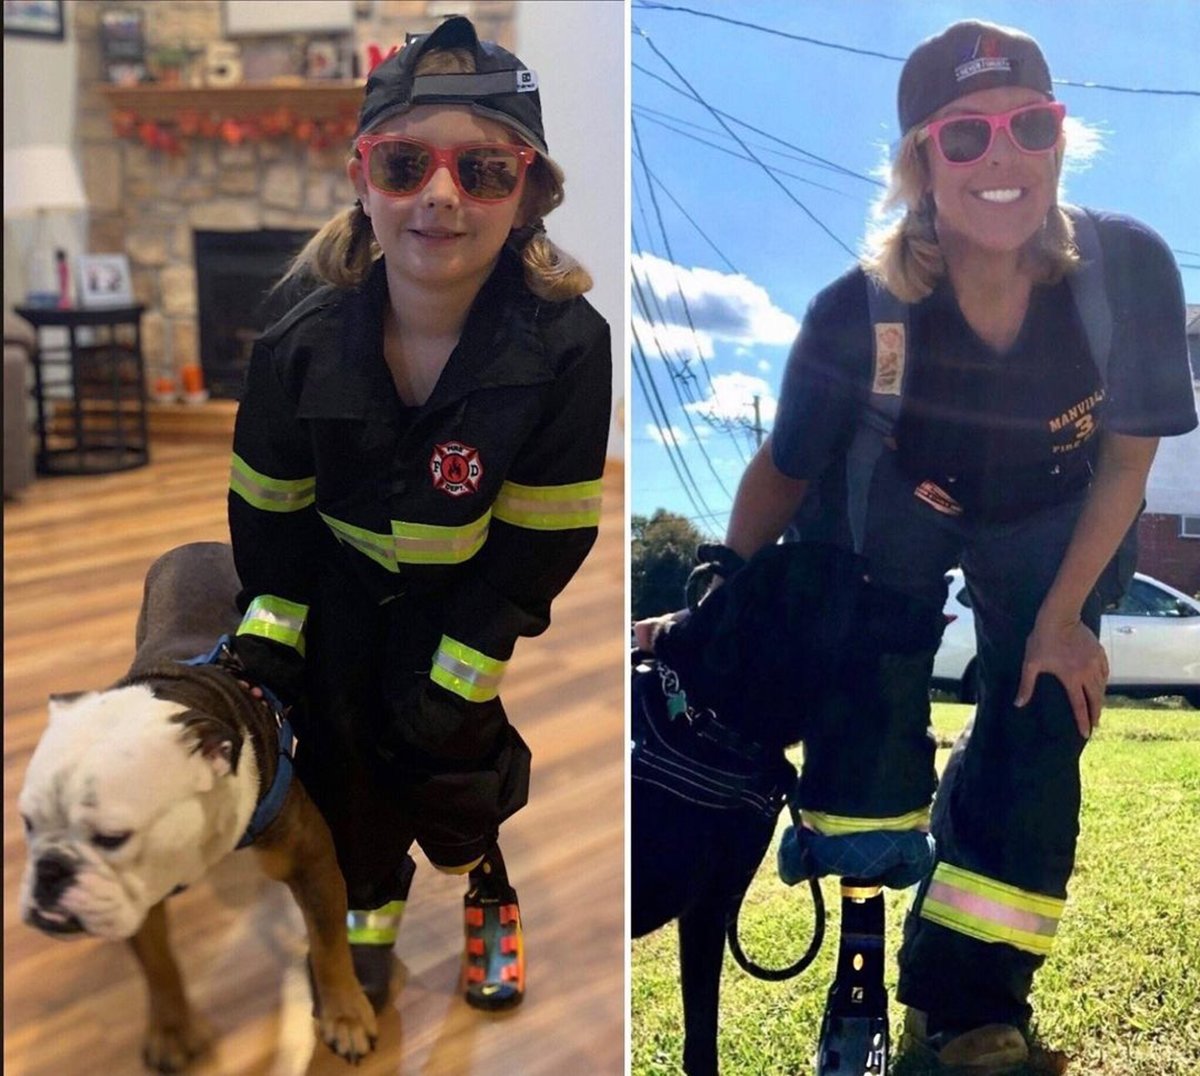 Amanda Sullivan, first female amputee firefighter